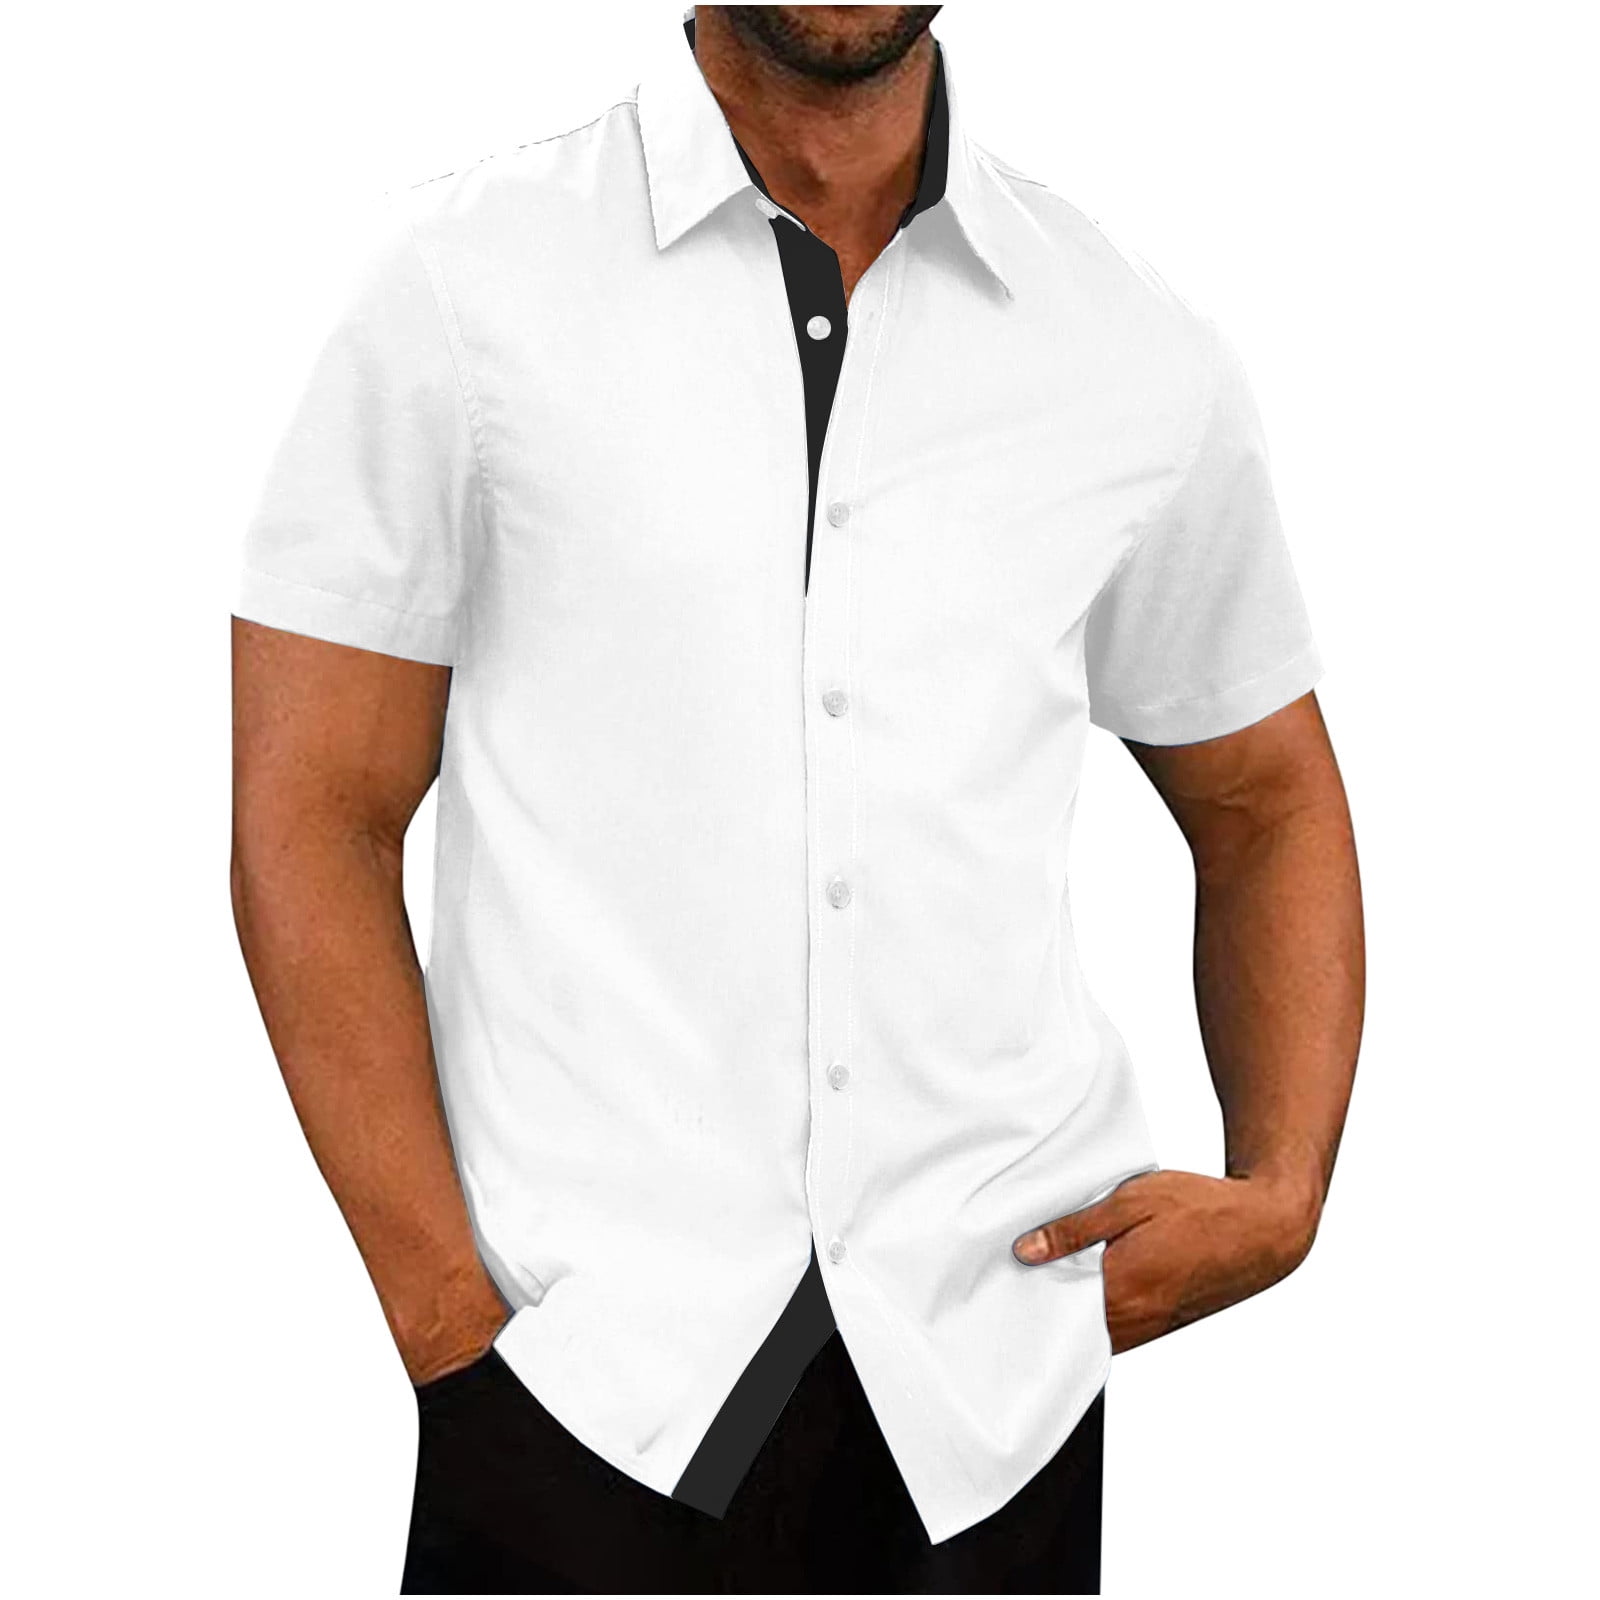 YYDGH Men's Plaid Short Sleeve Button Down Shirts Casual Cotton